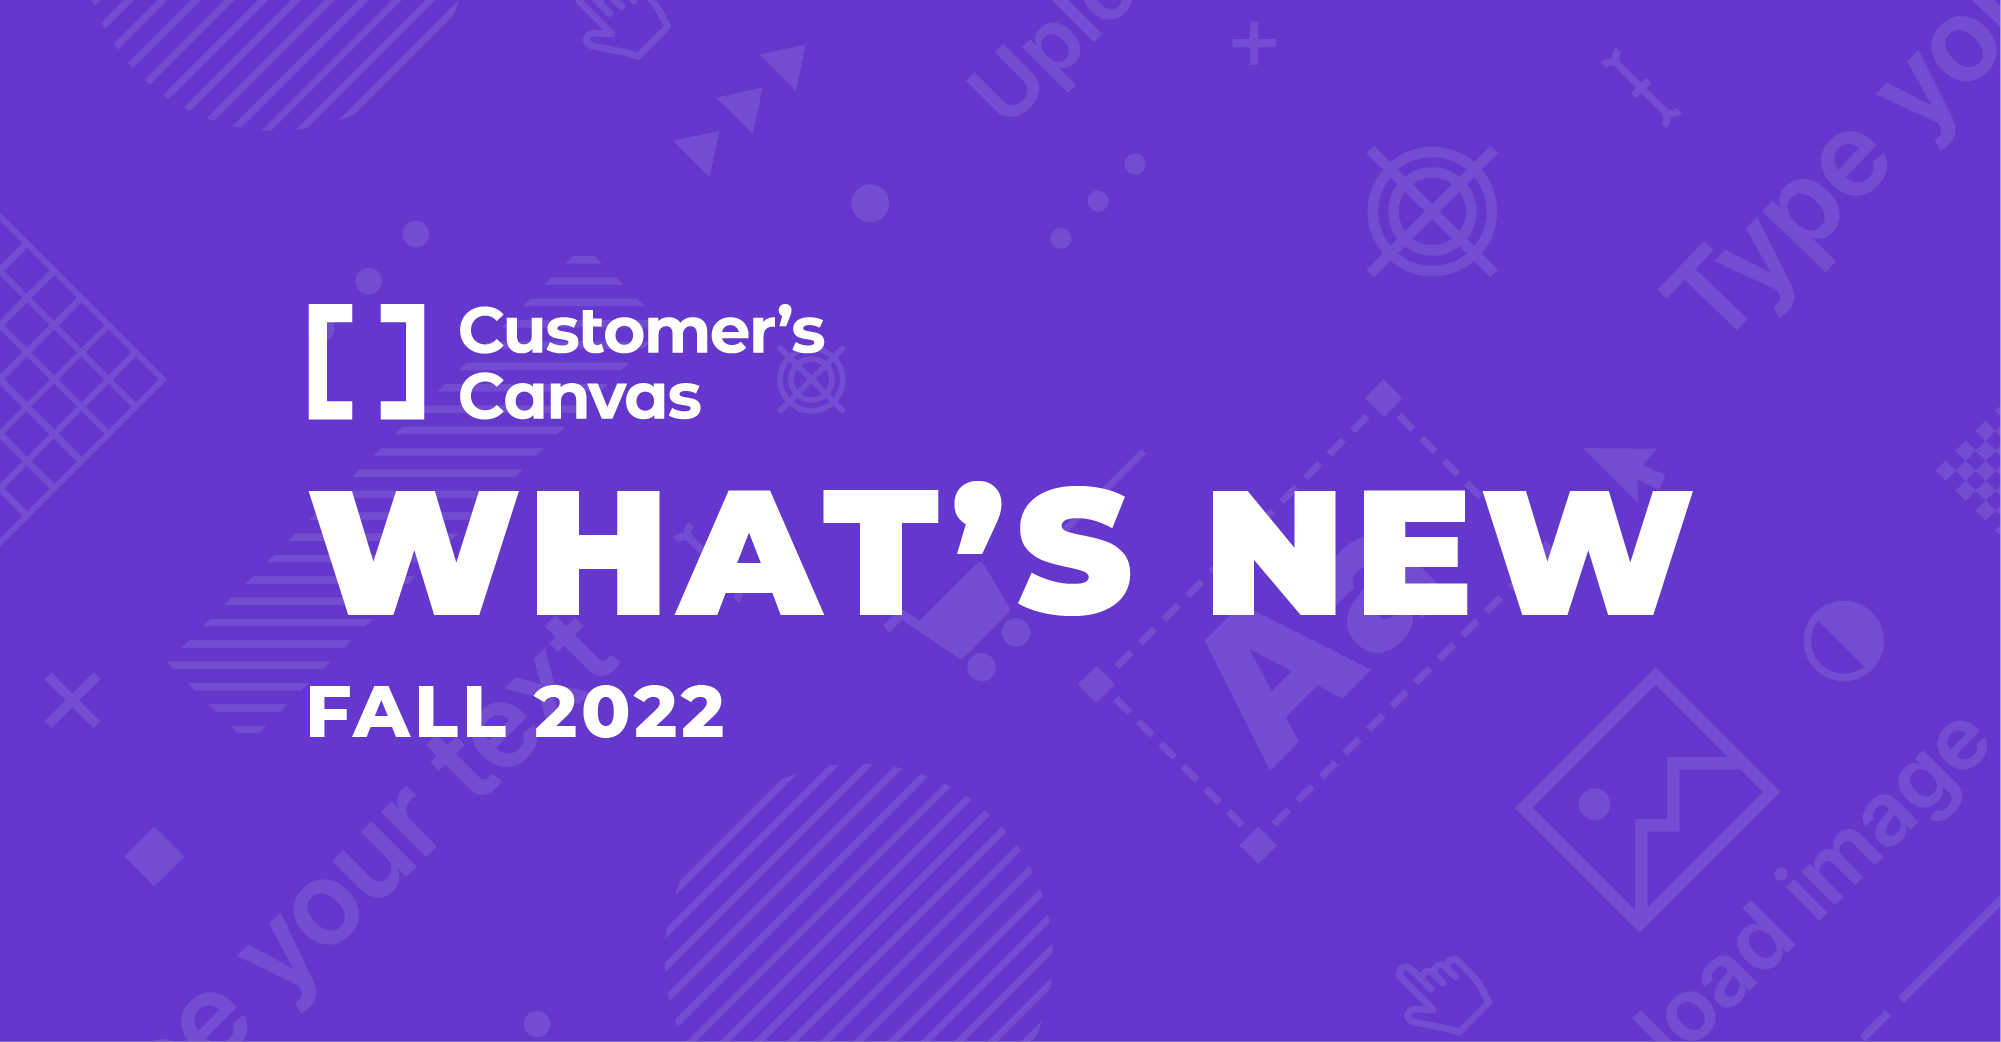 A better Customer’s Canvas: Fall 2022 